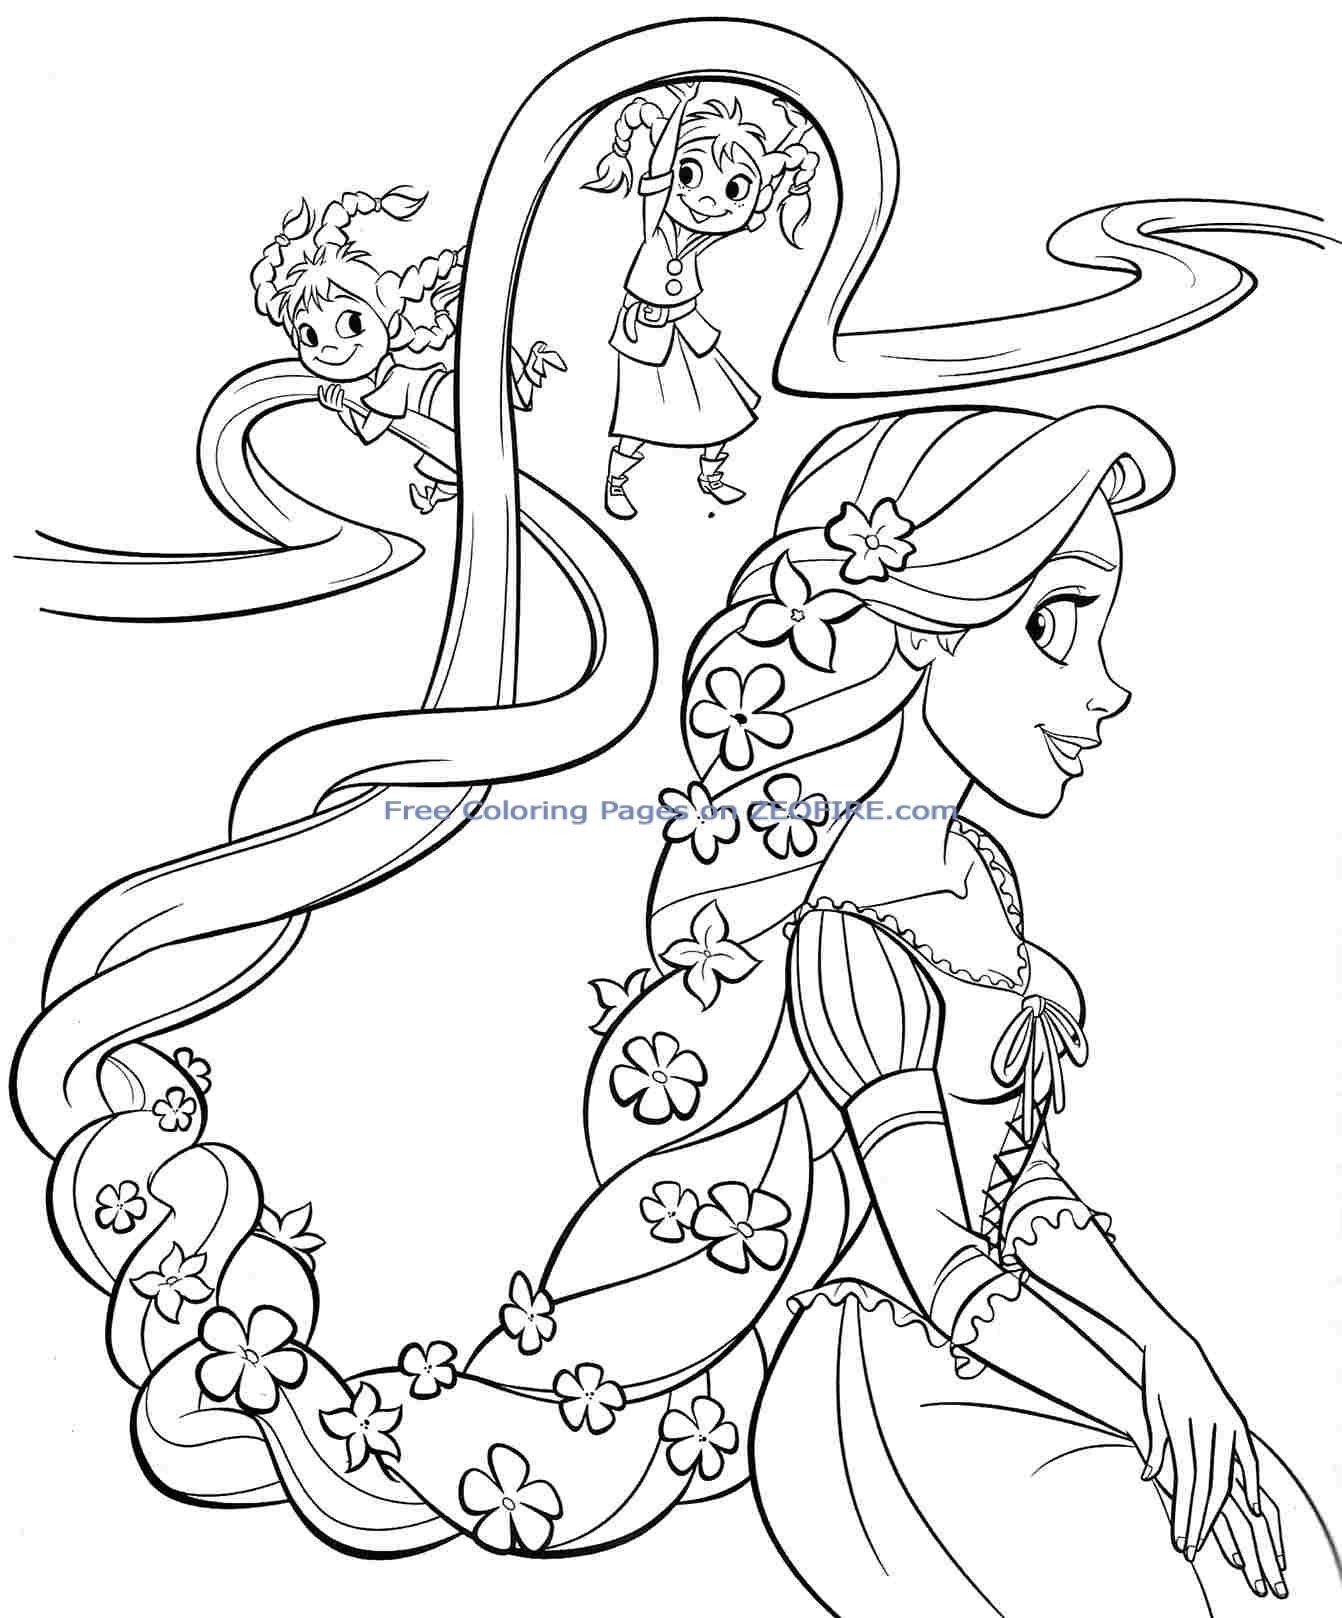 Disney Princess Coloring Pages.com